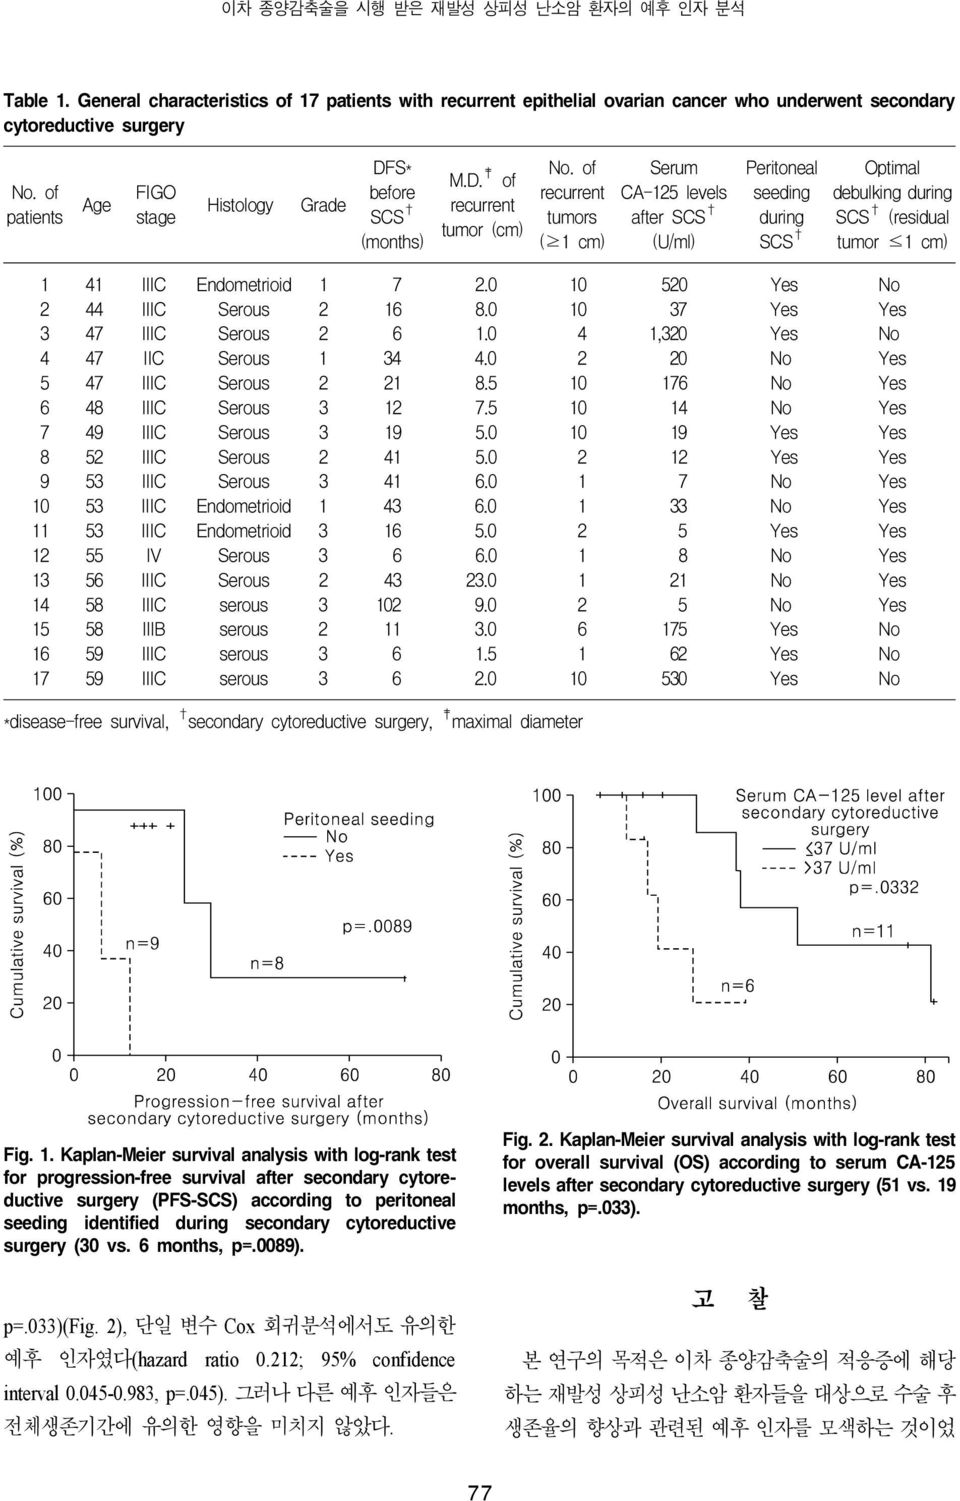 of recurrent tumors ( 1 cm) Serum CA-125 levels after SCS (U/ml) Peritoneal seeding during SCS Optimal debulking during SCS (residual tumor 1 cm) 1 41 IIIC Endometrioid 1 7 2.